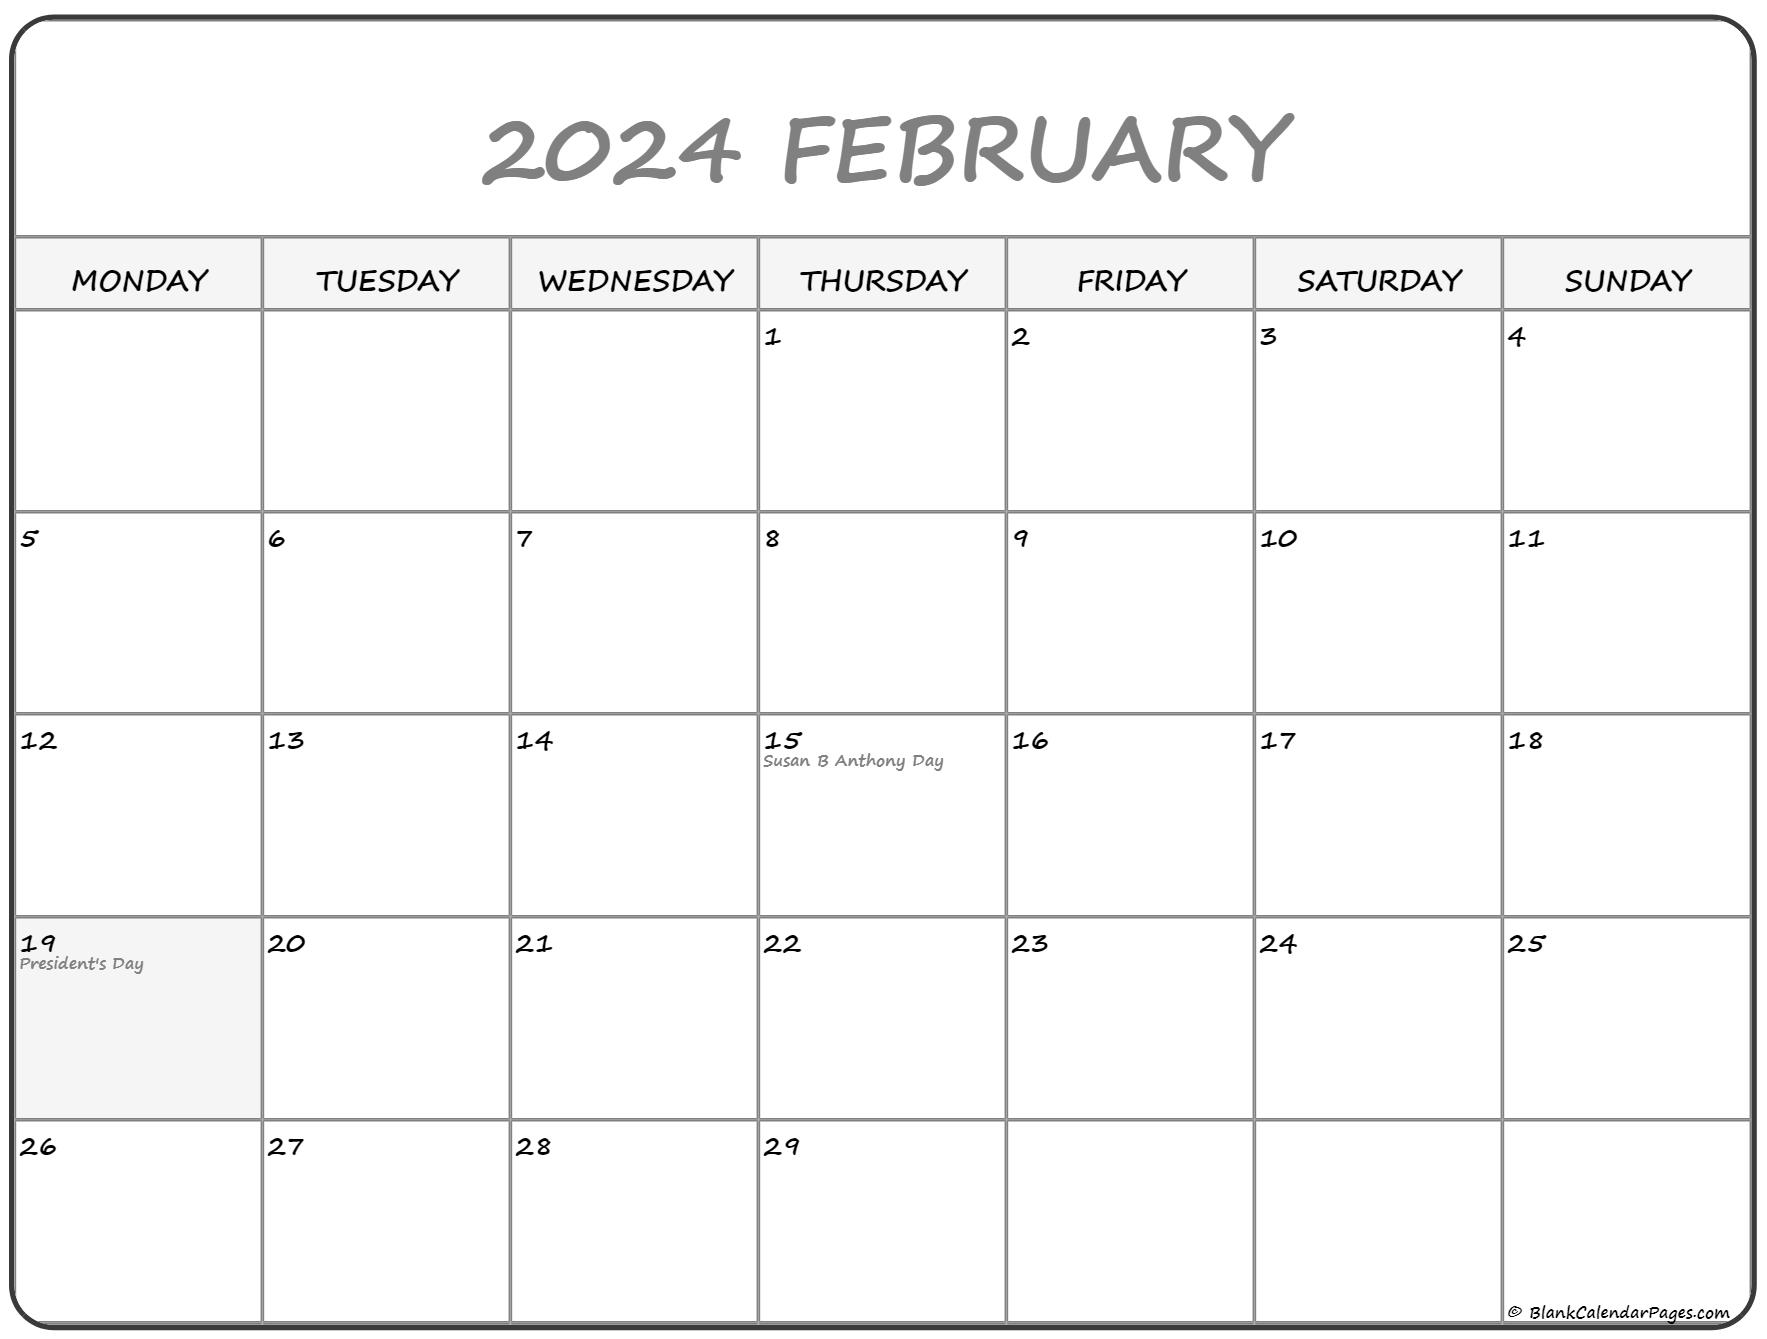 February 2022 Monday Calendar | Monday to Sunday